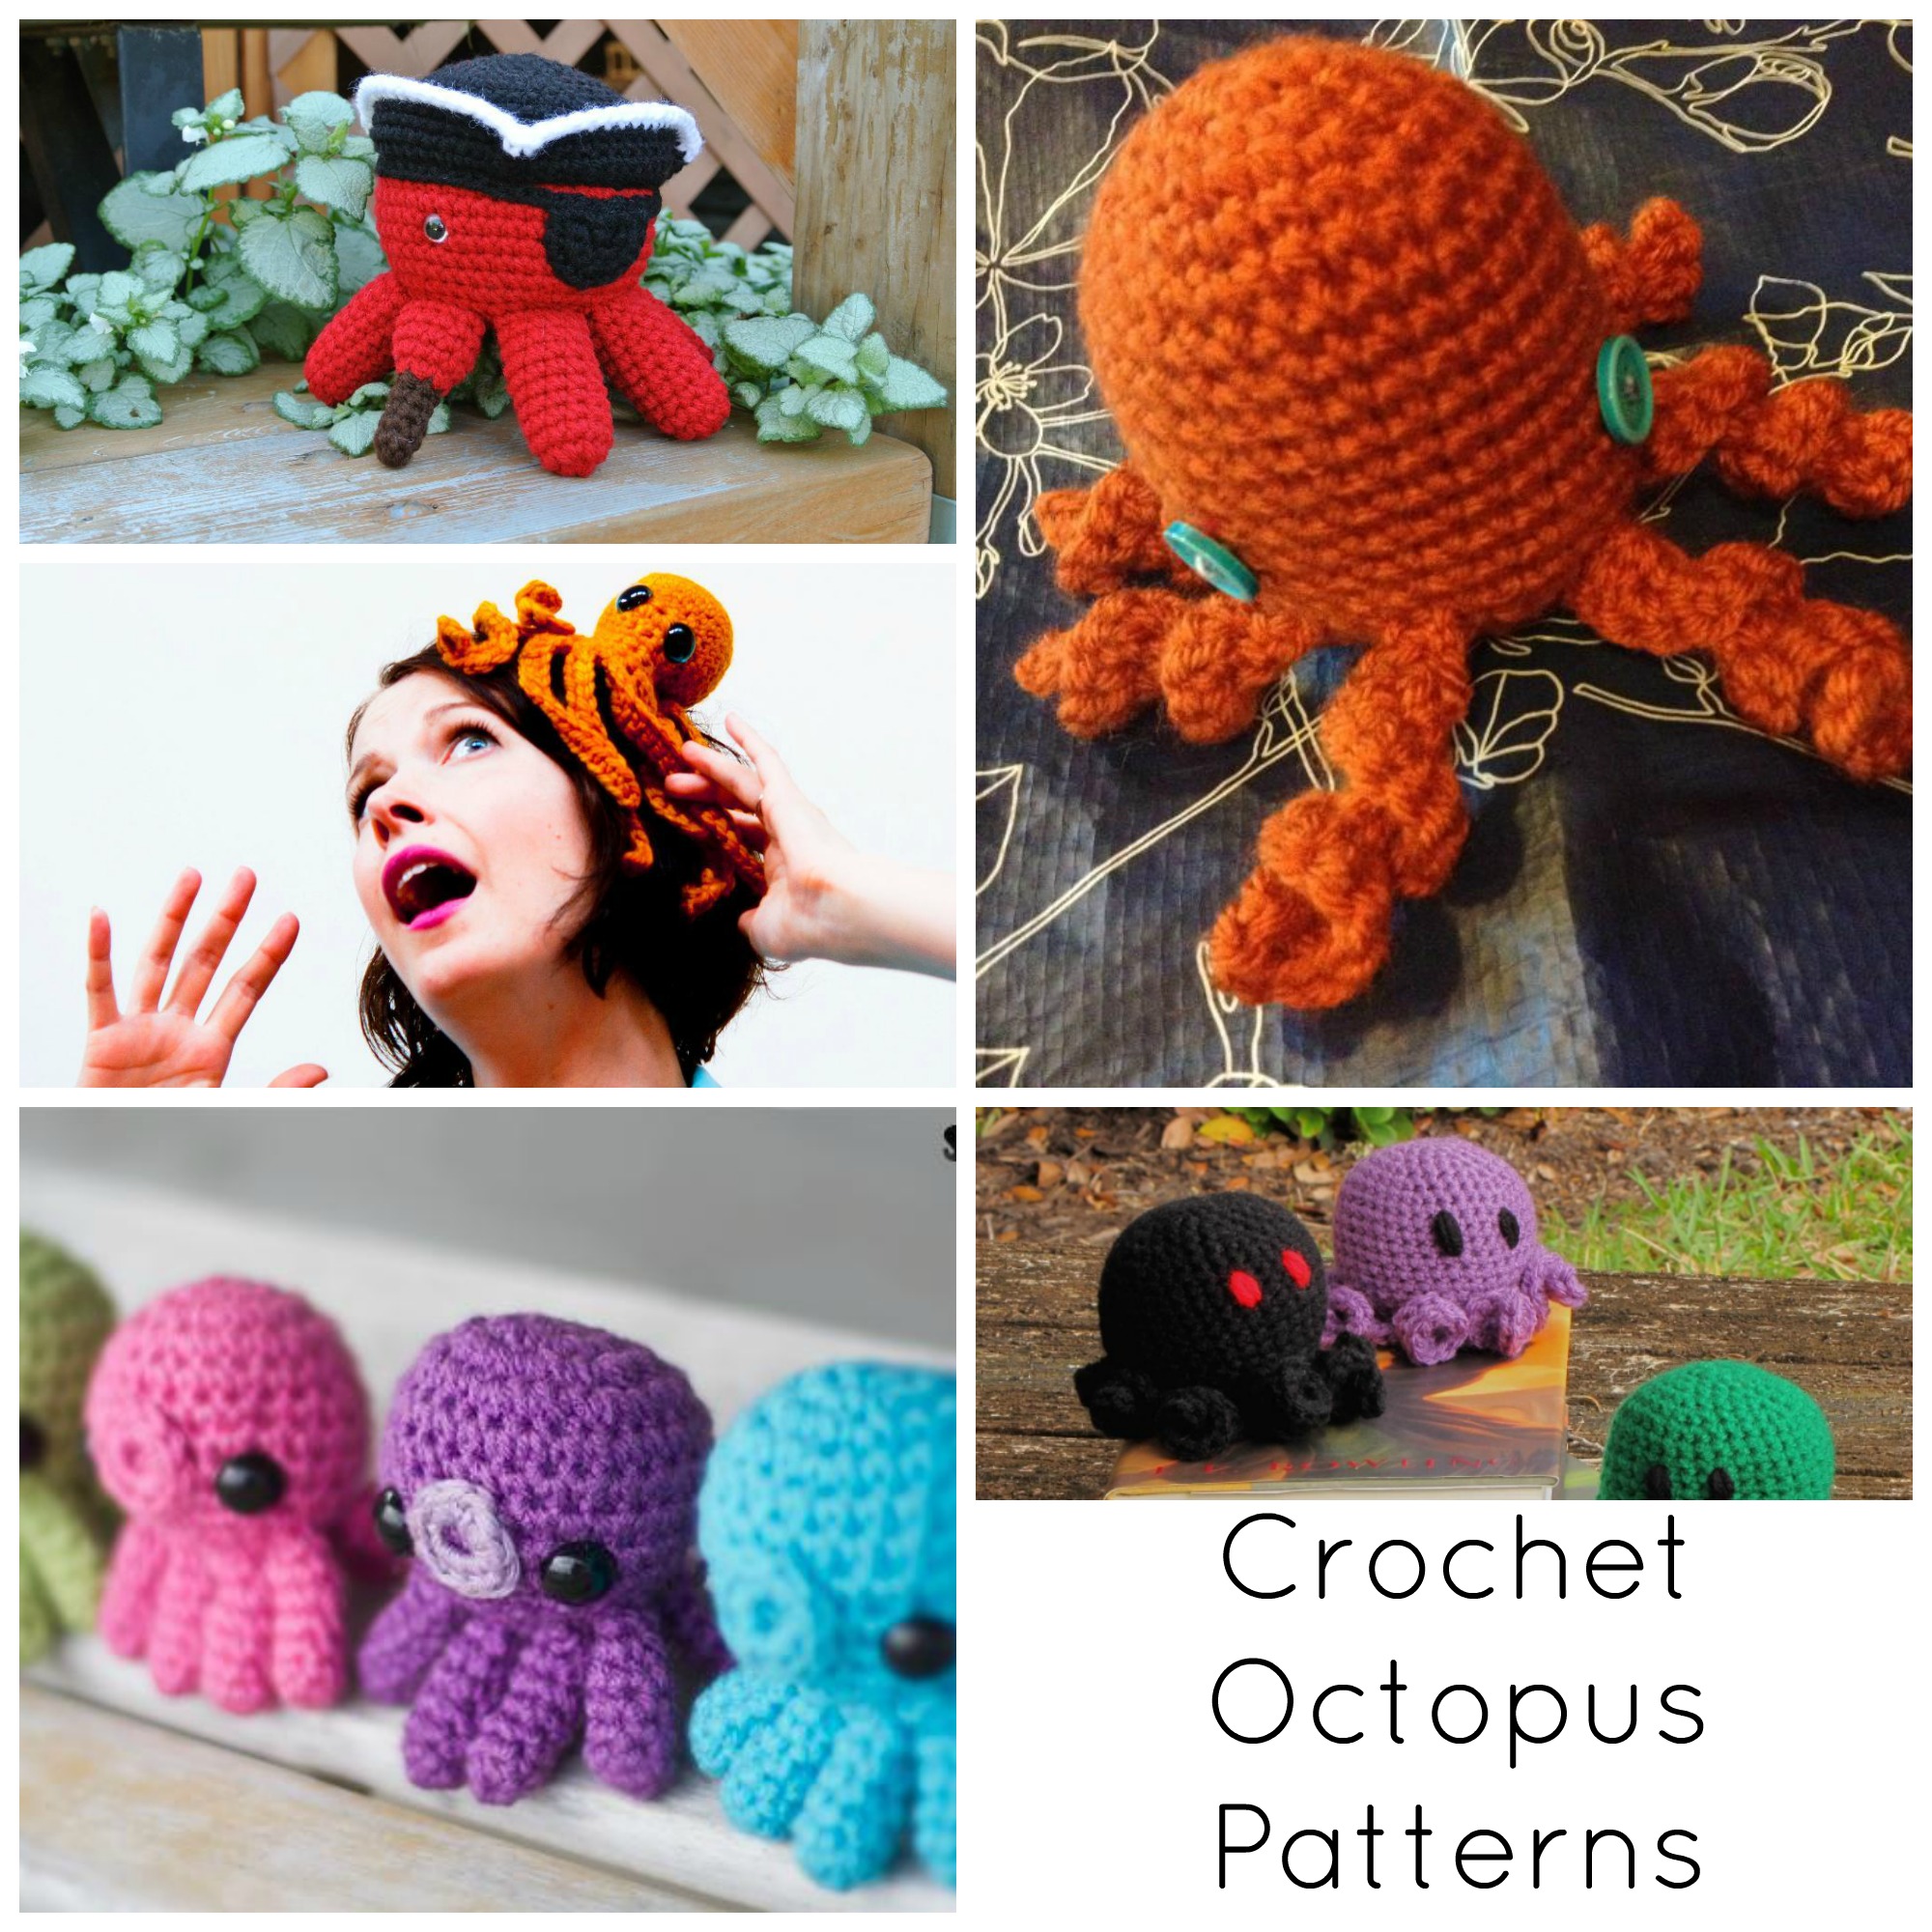 Crochet Octopus Patterns